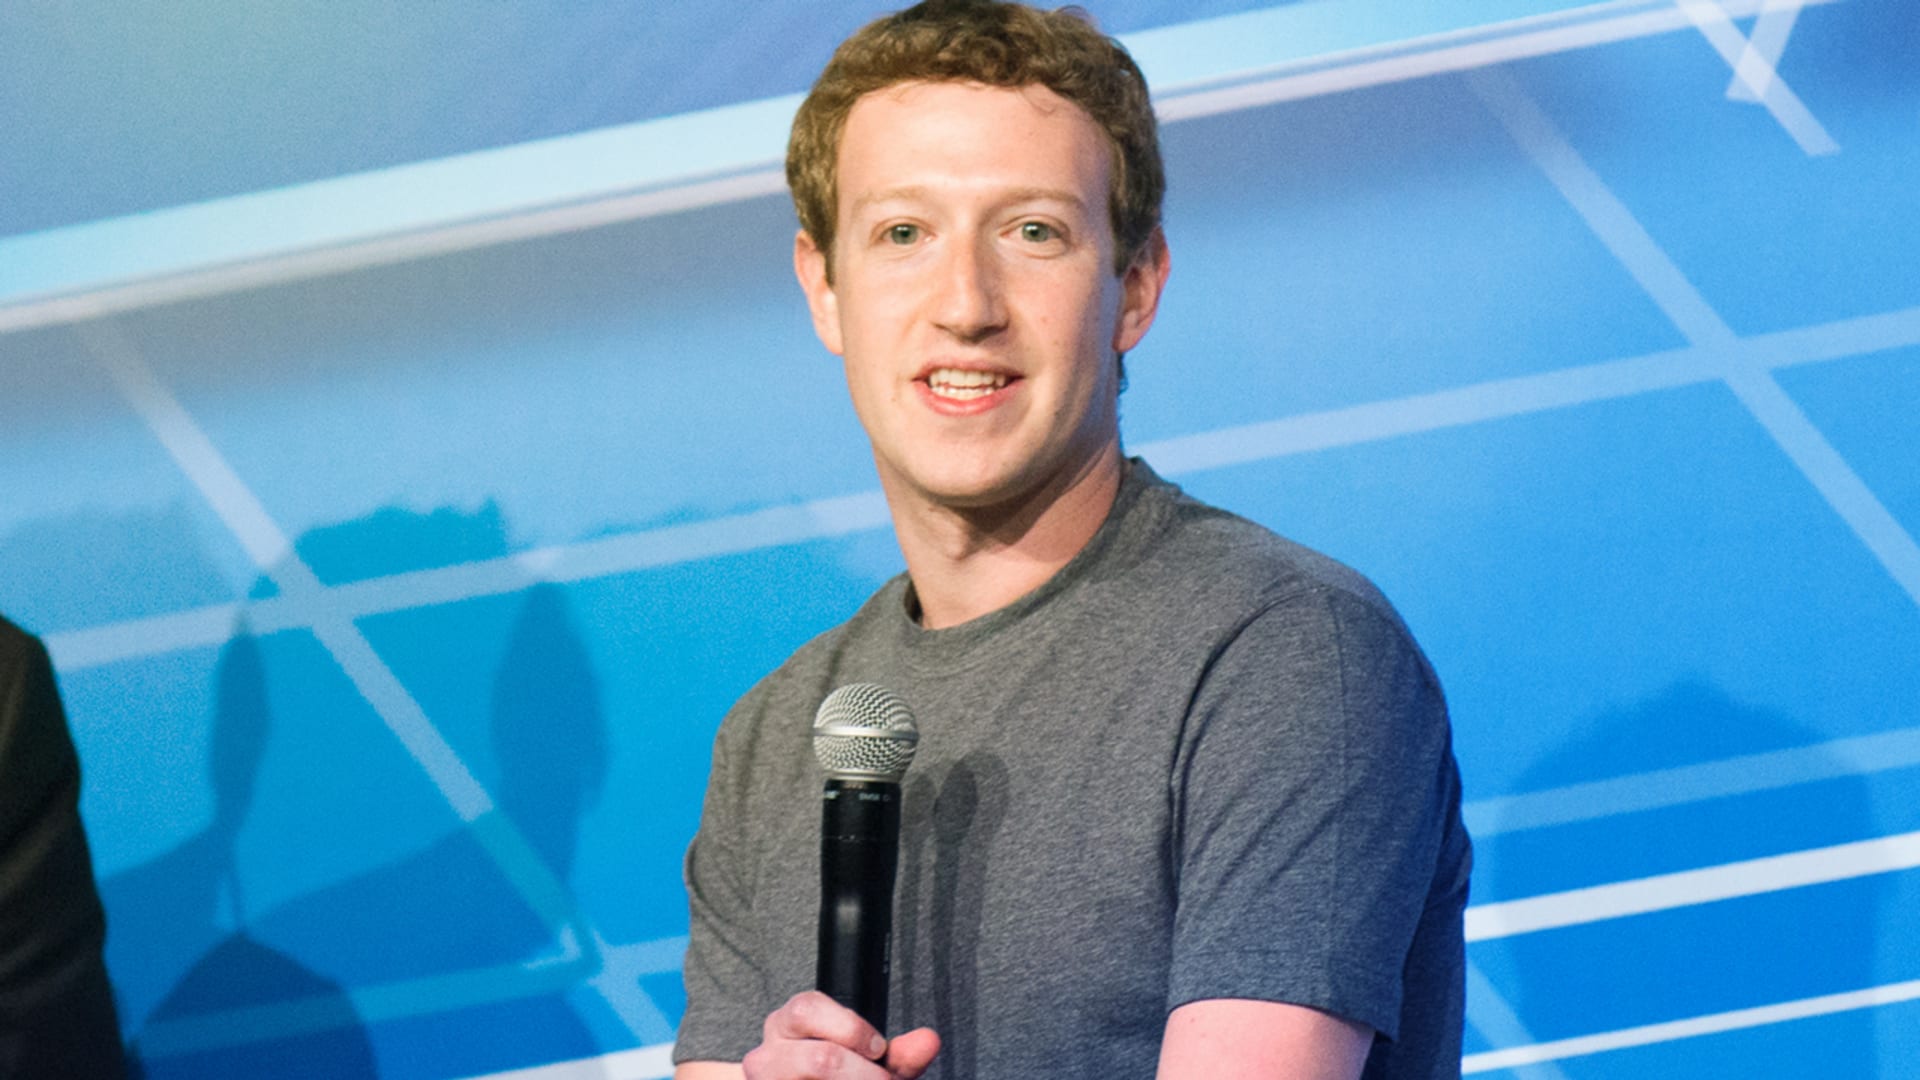 Report: Mark Zuckerberg will testify before Congress